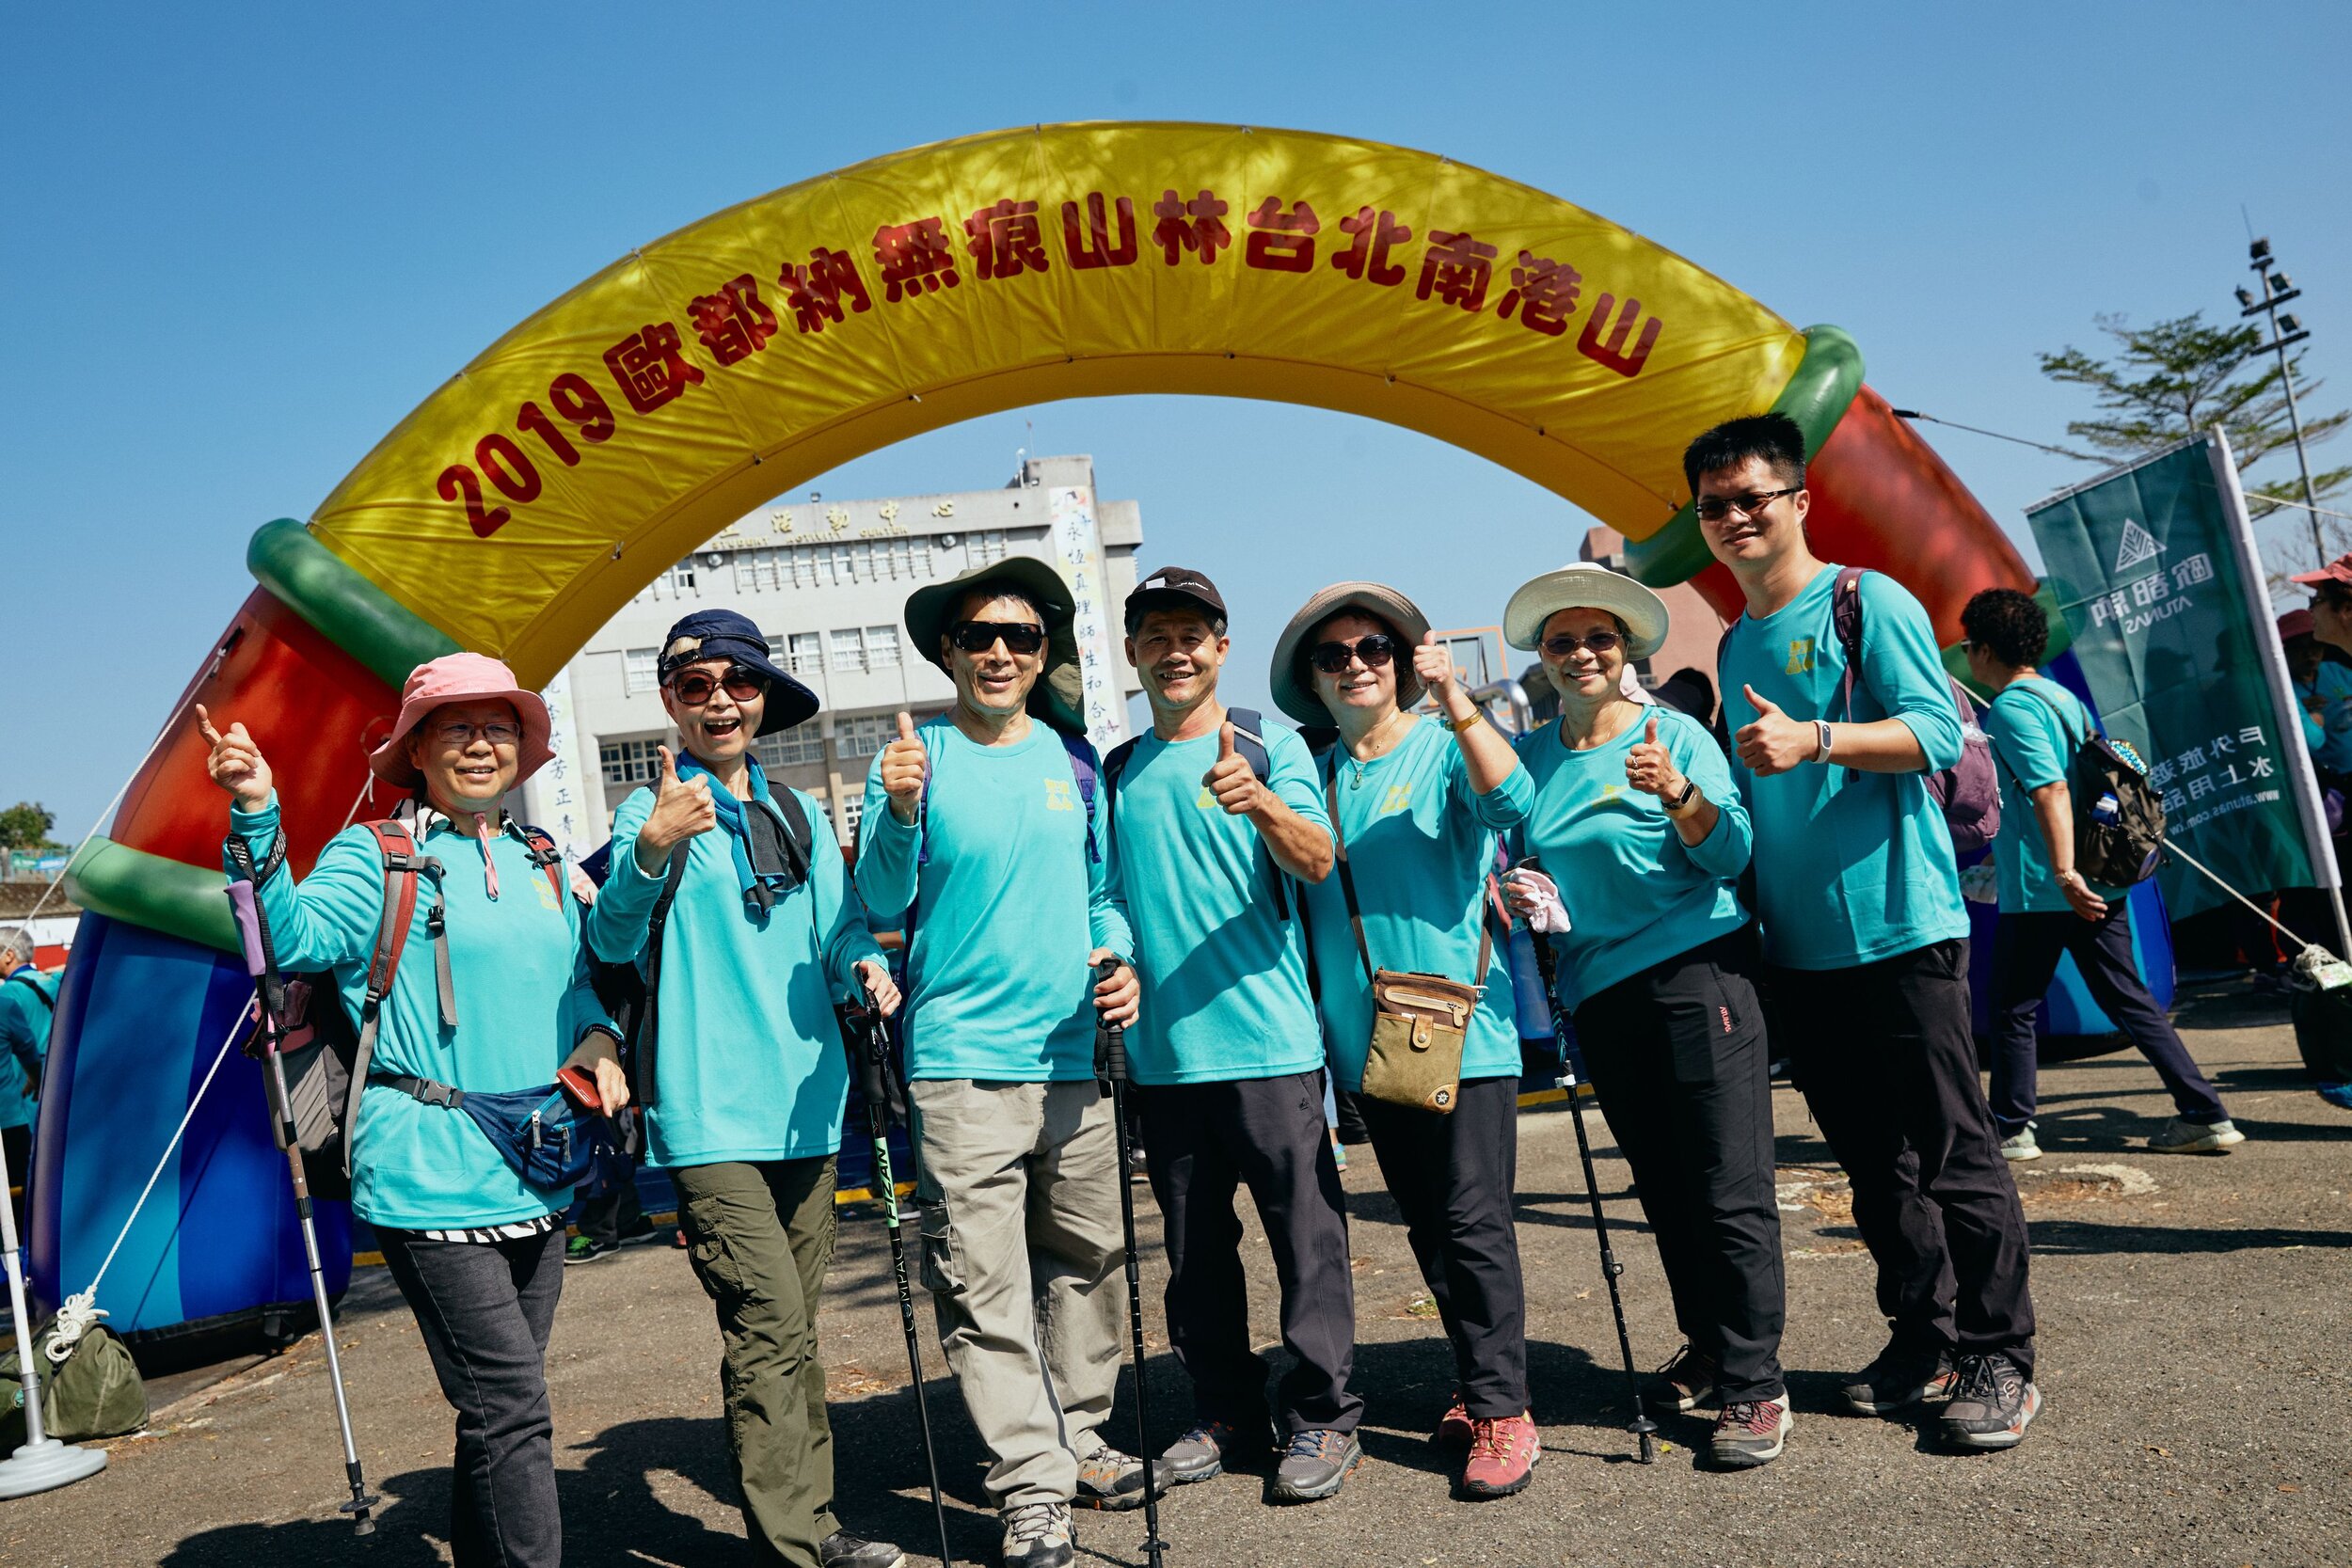 20191117-events-atunas-hiking-taipei-歐都納-無痕山林-永春高中-台北場_51.jpg